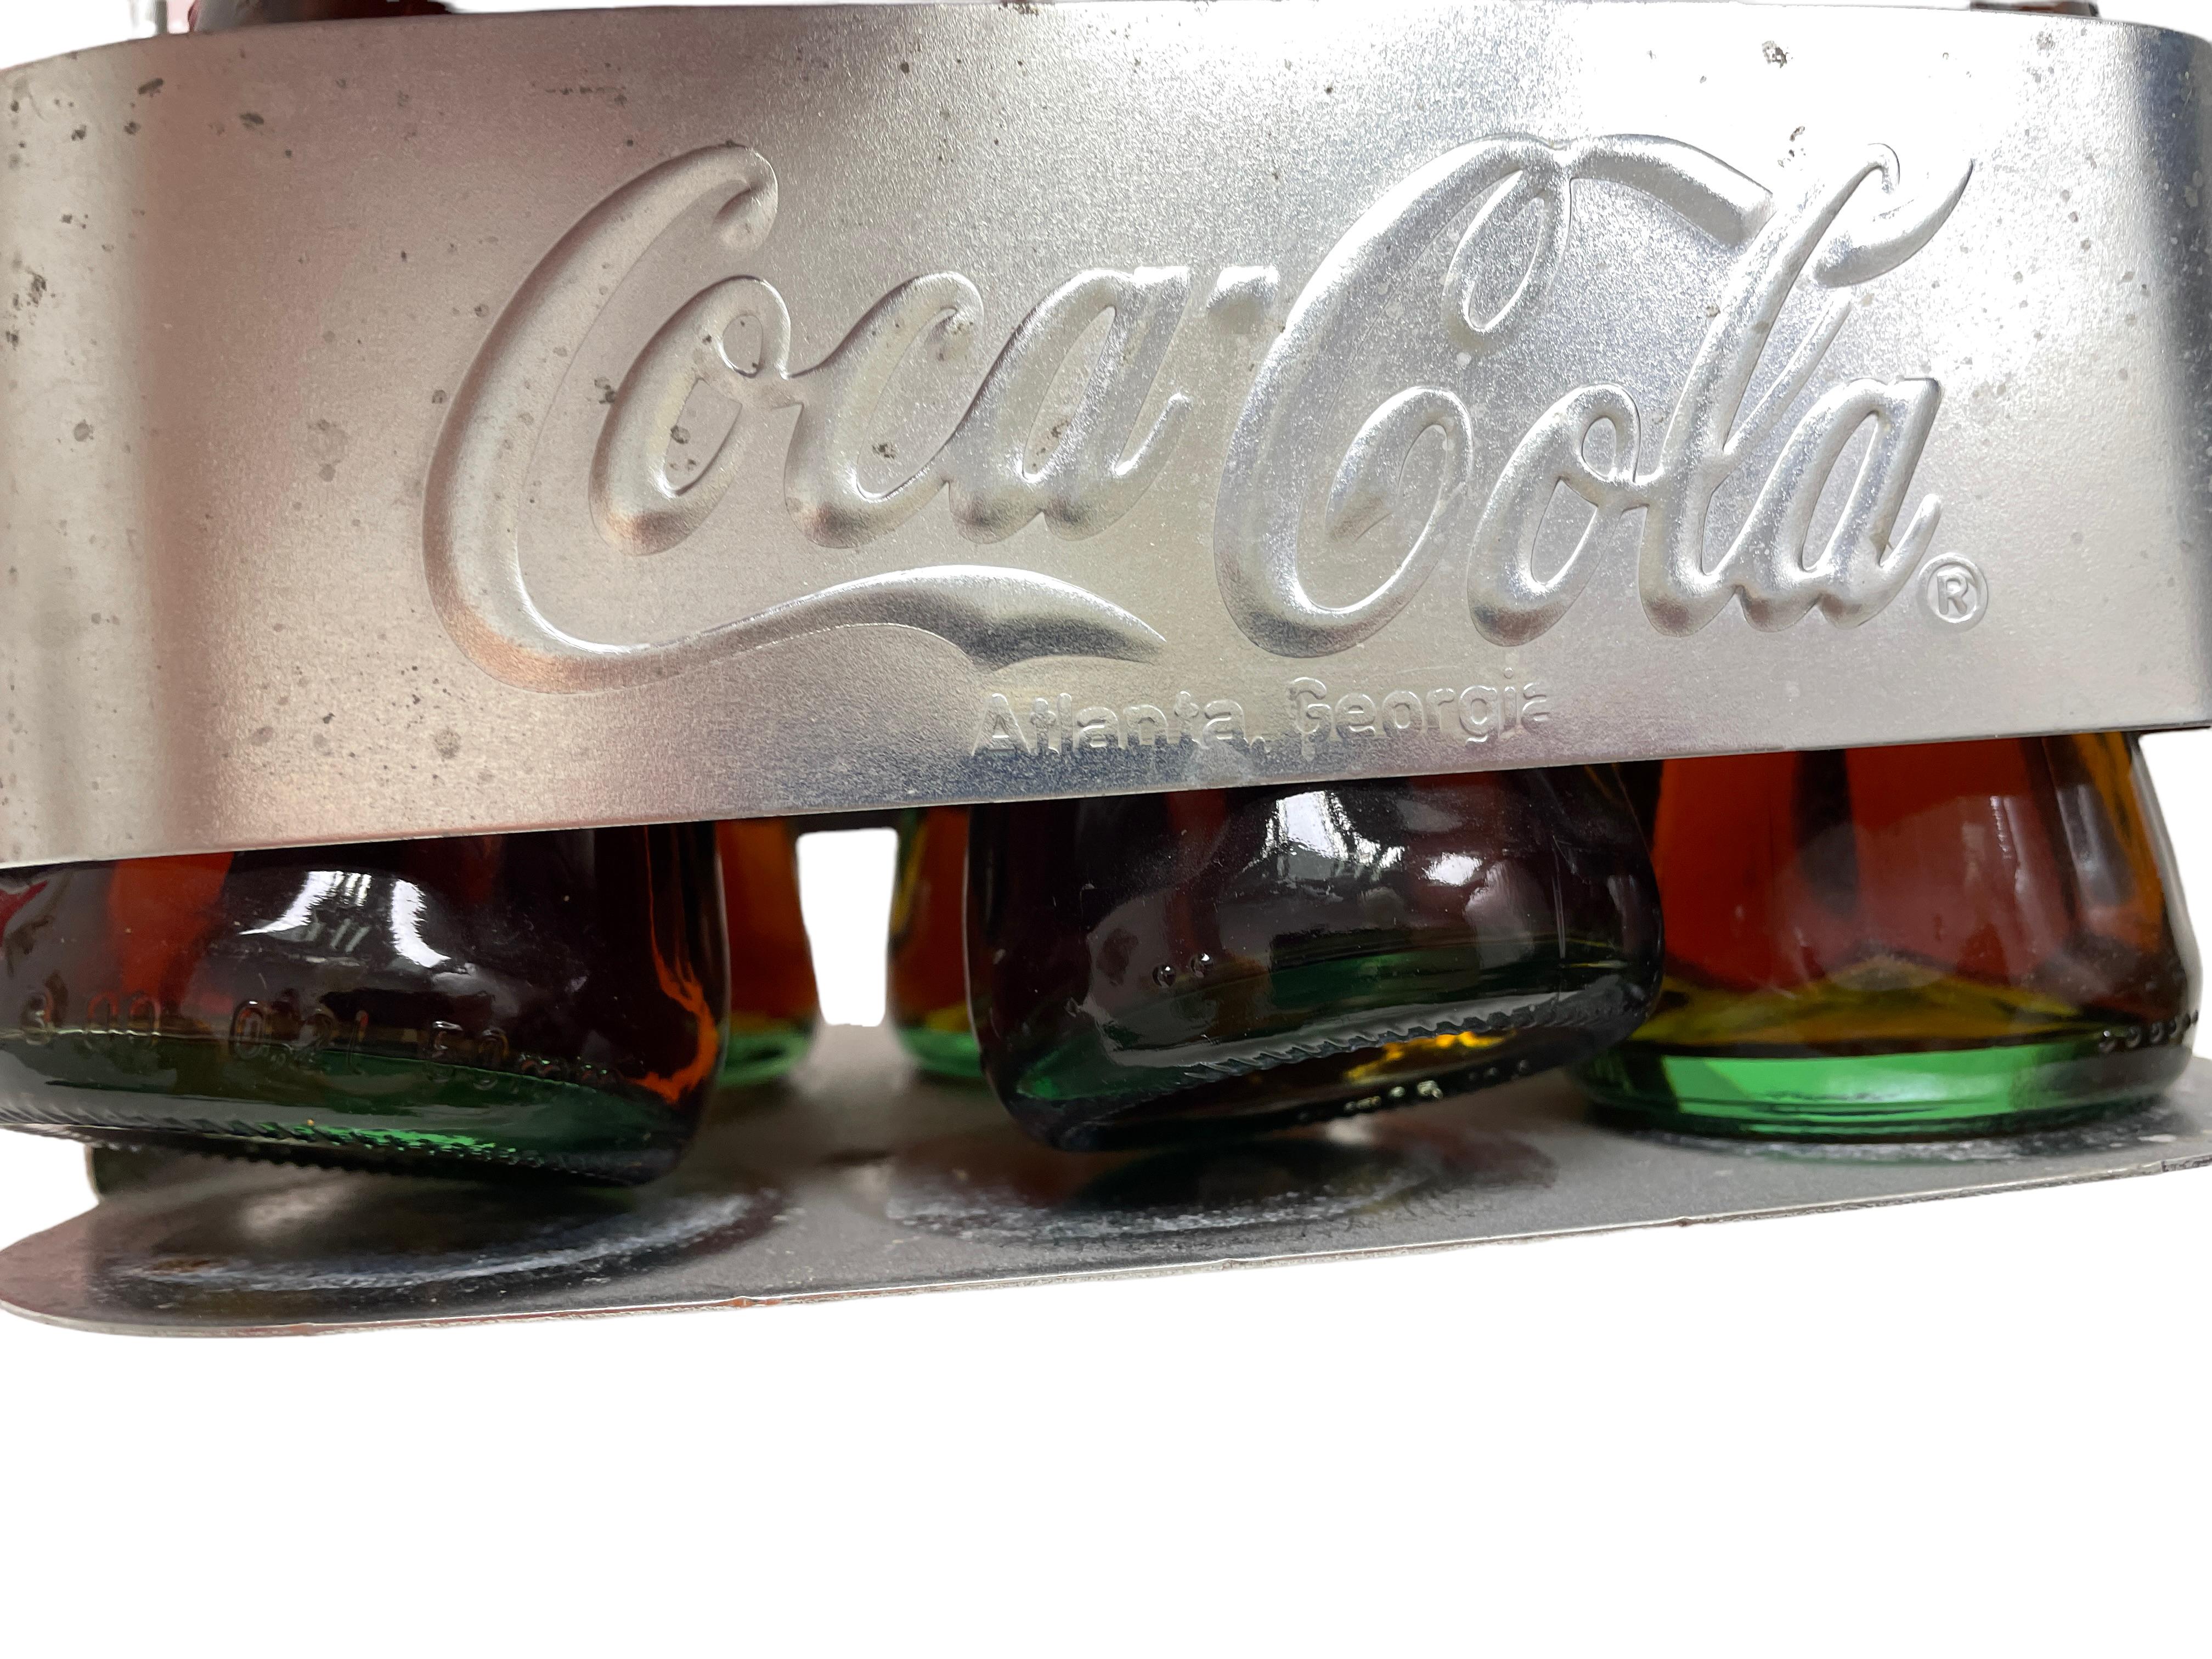 Mid-20th Century 1960s German Vintage Advertising Metal Coca-Cola Stadium Cooler & Bottle Carrier For Sale